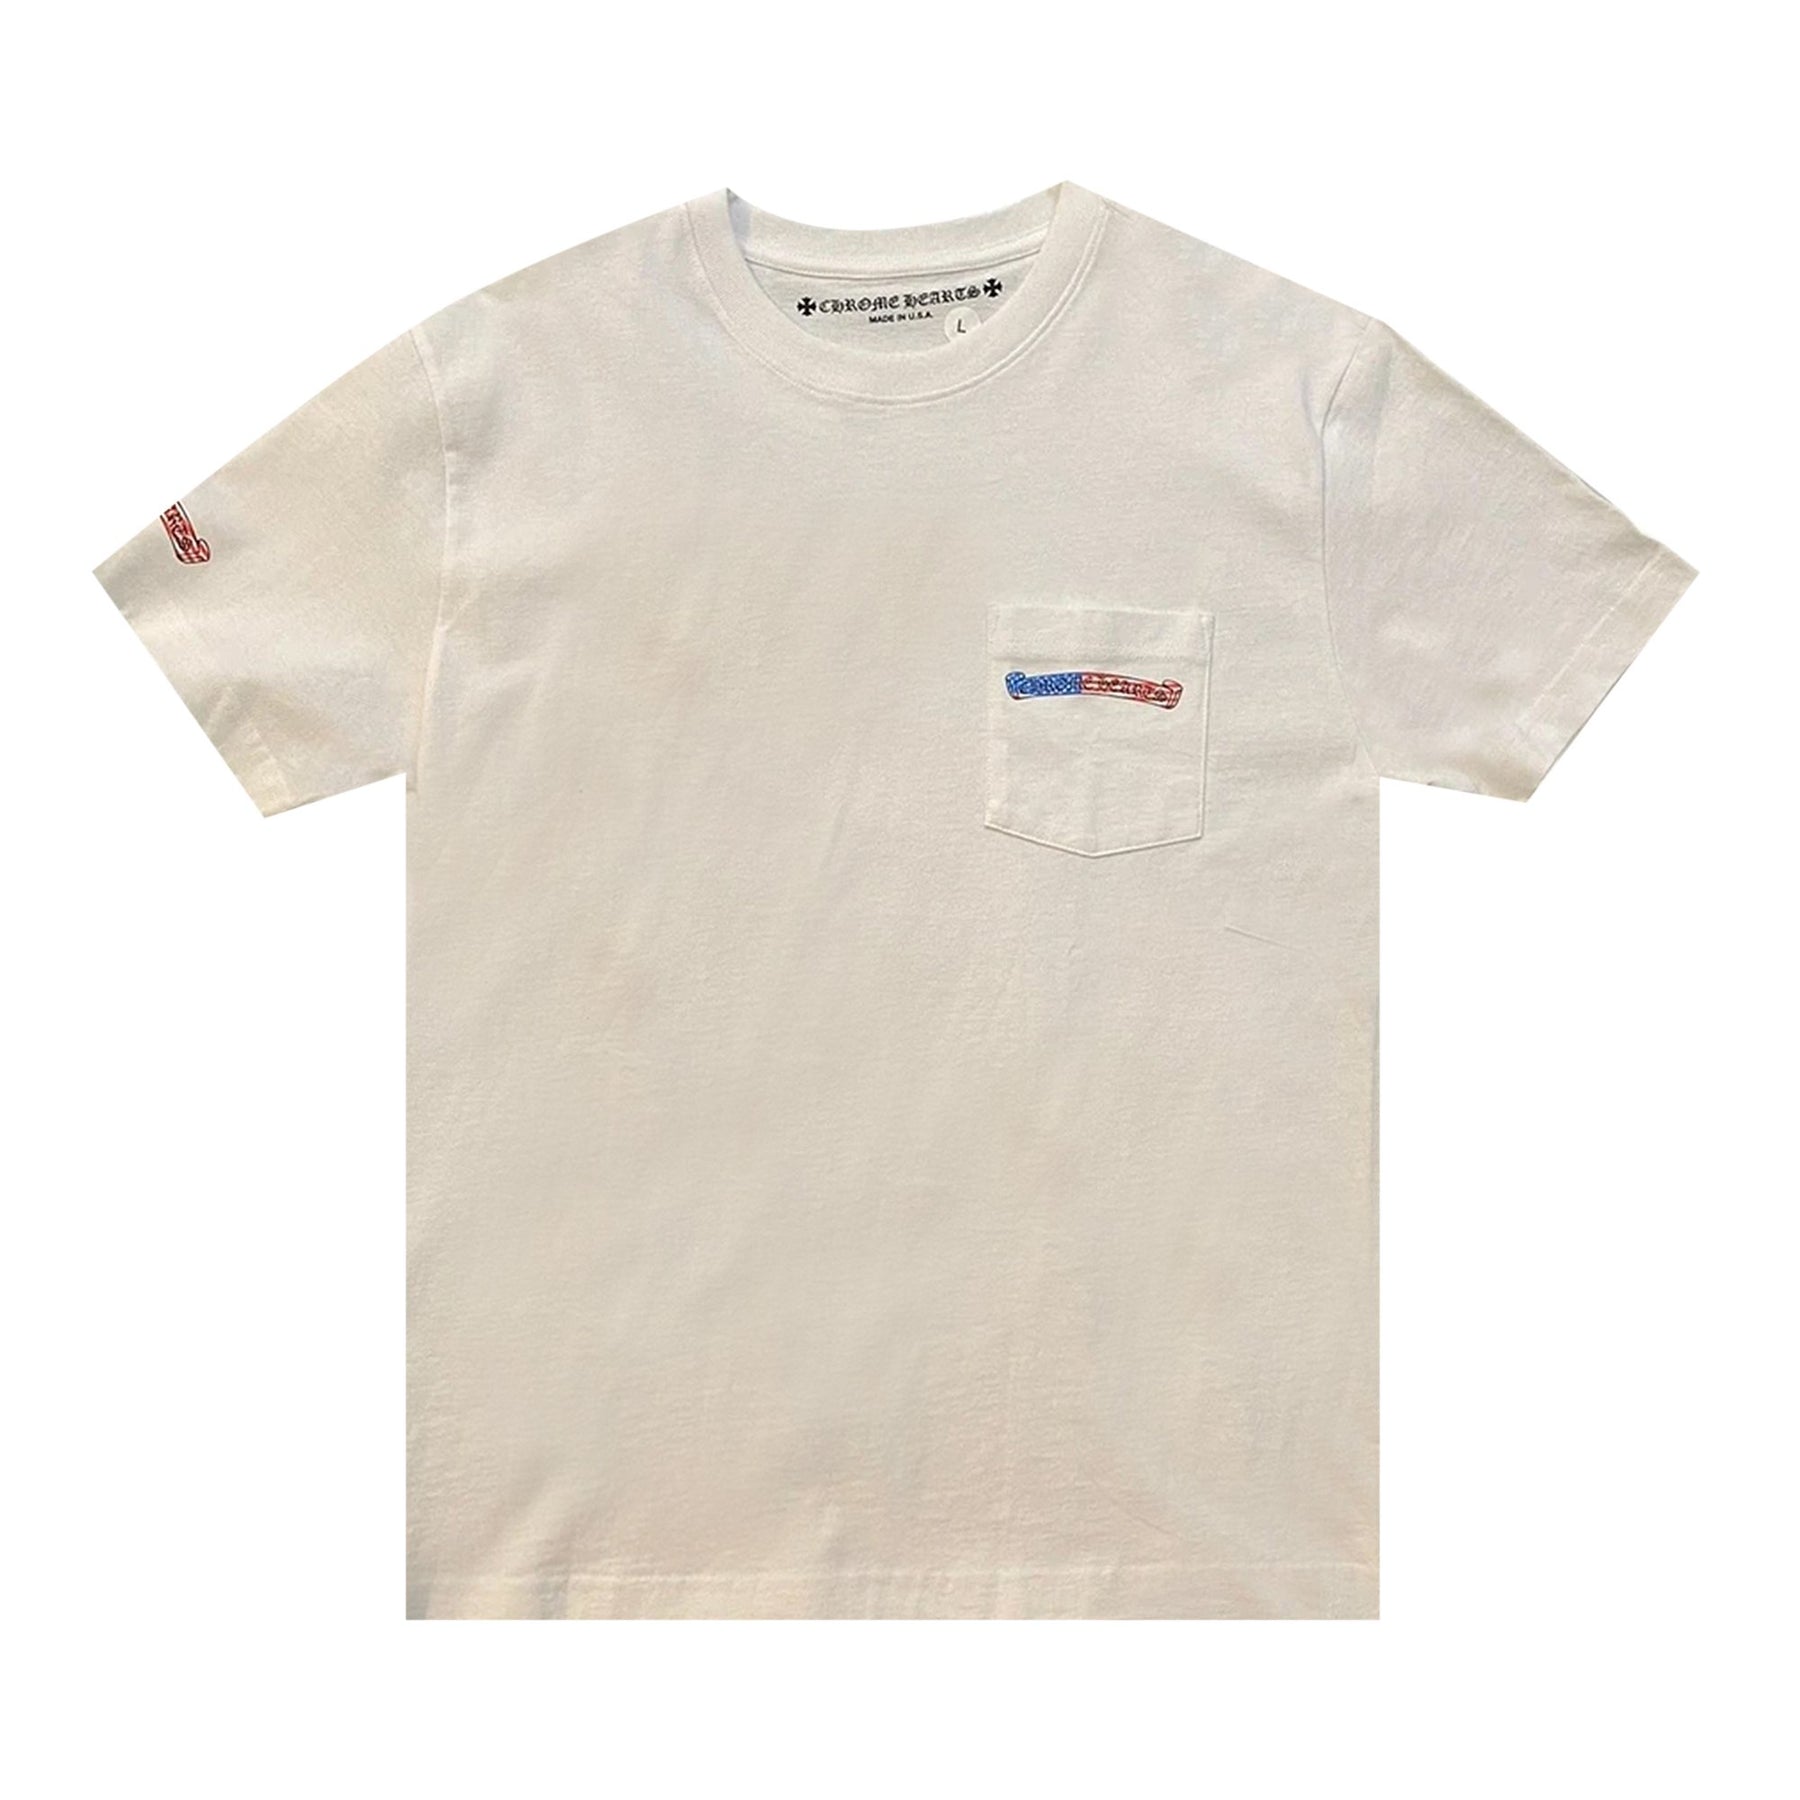 Chrome Hearts Matty Boy America T-shirt White